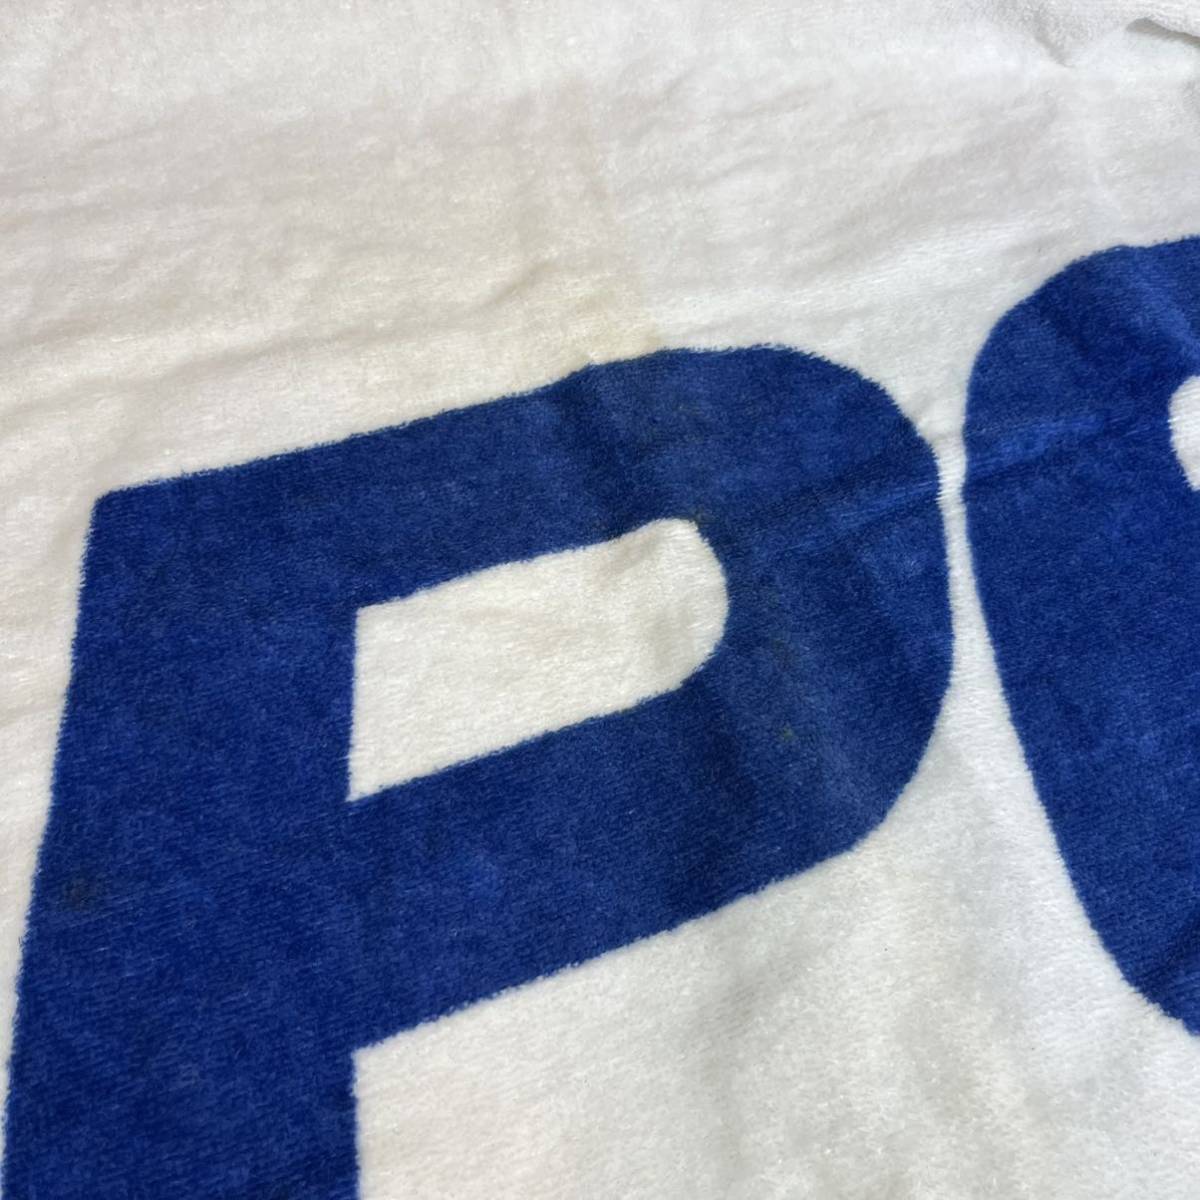 PEPSI Pepsiman Pepsi-Cola big ta Horta oru bath towel 185×93cm collection retro 